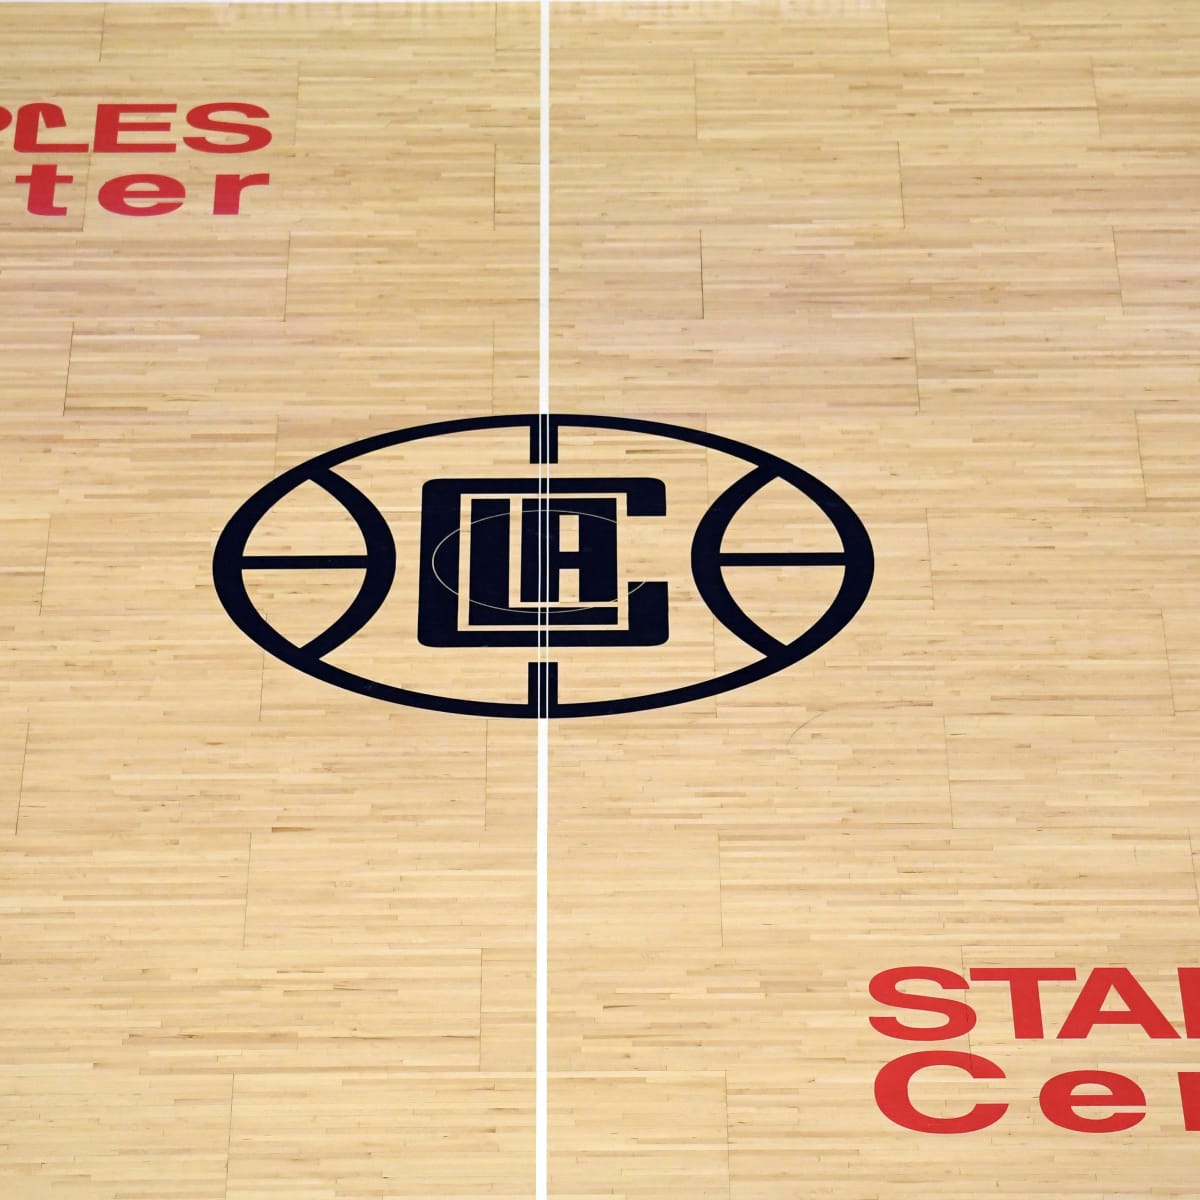 LA Clippers Hypothetical Rebranding – Hooped Up